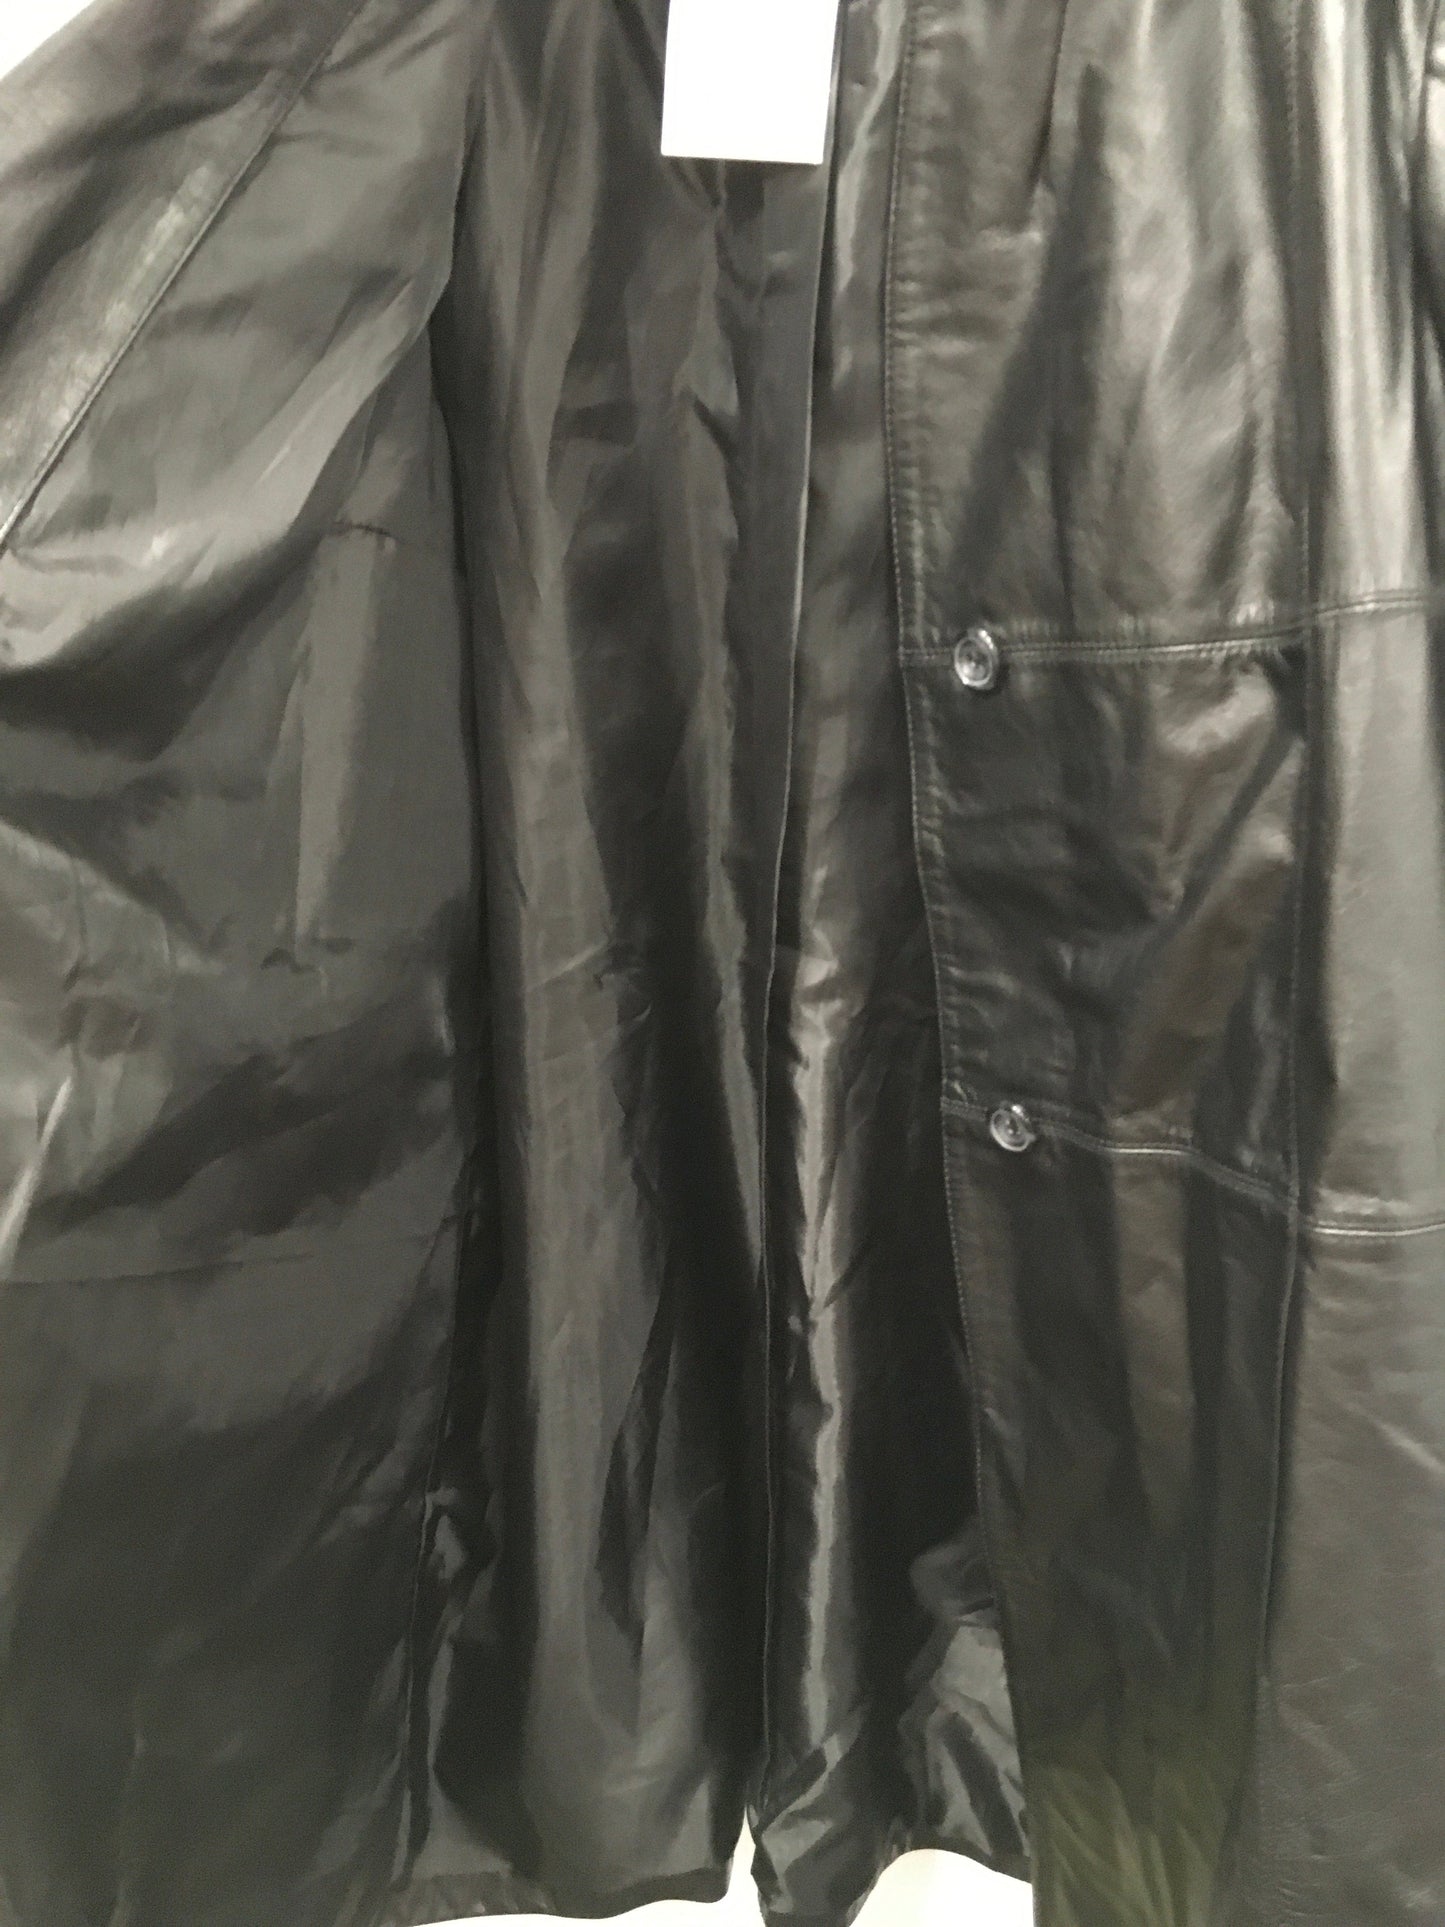 Black Jacket Leather Jessica London, Size 22